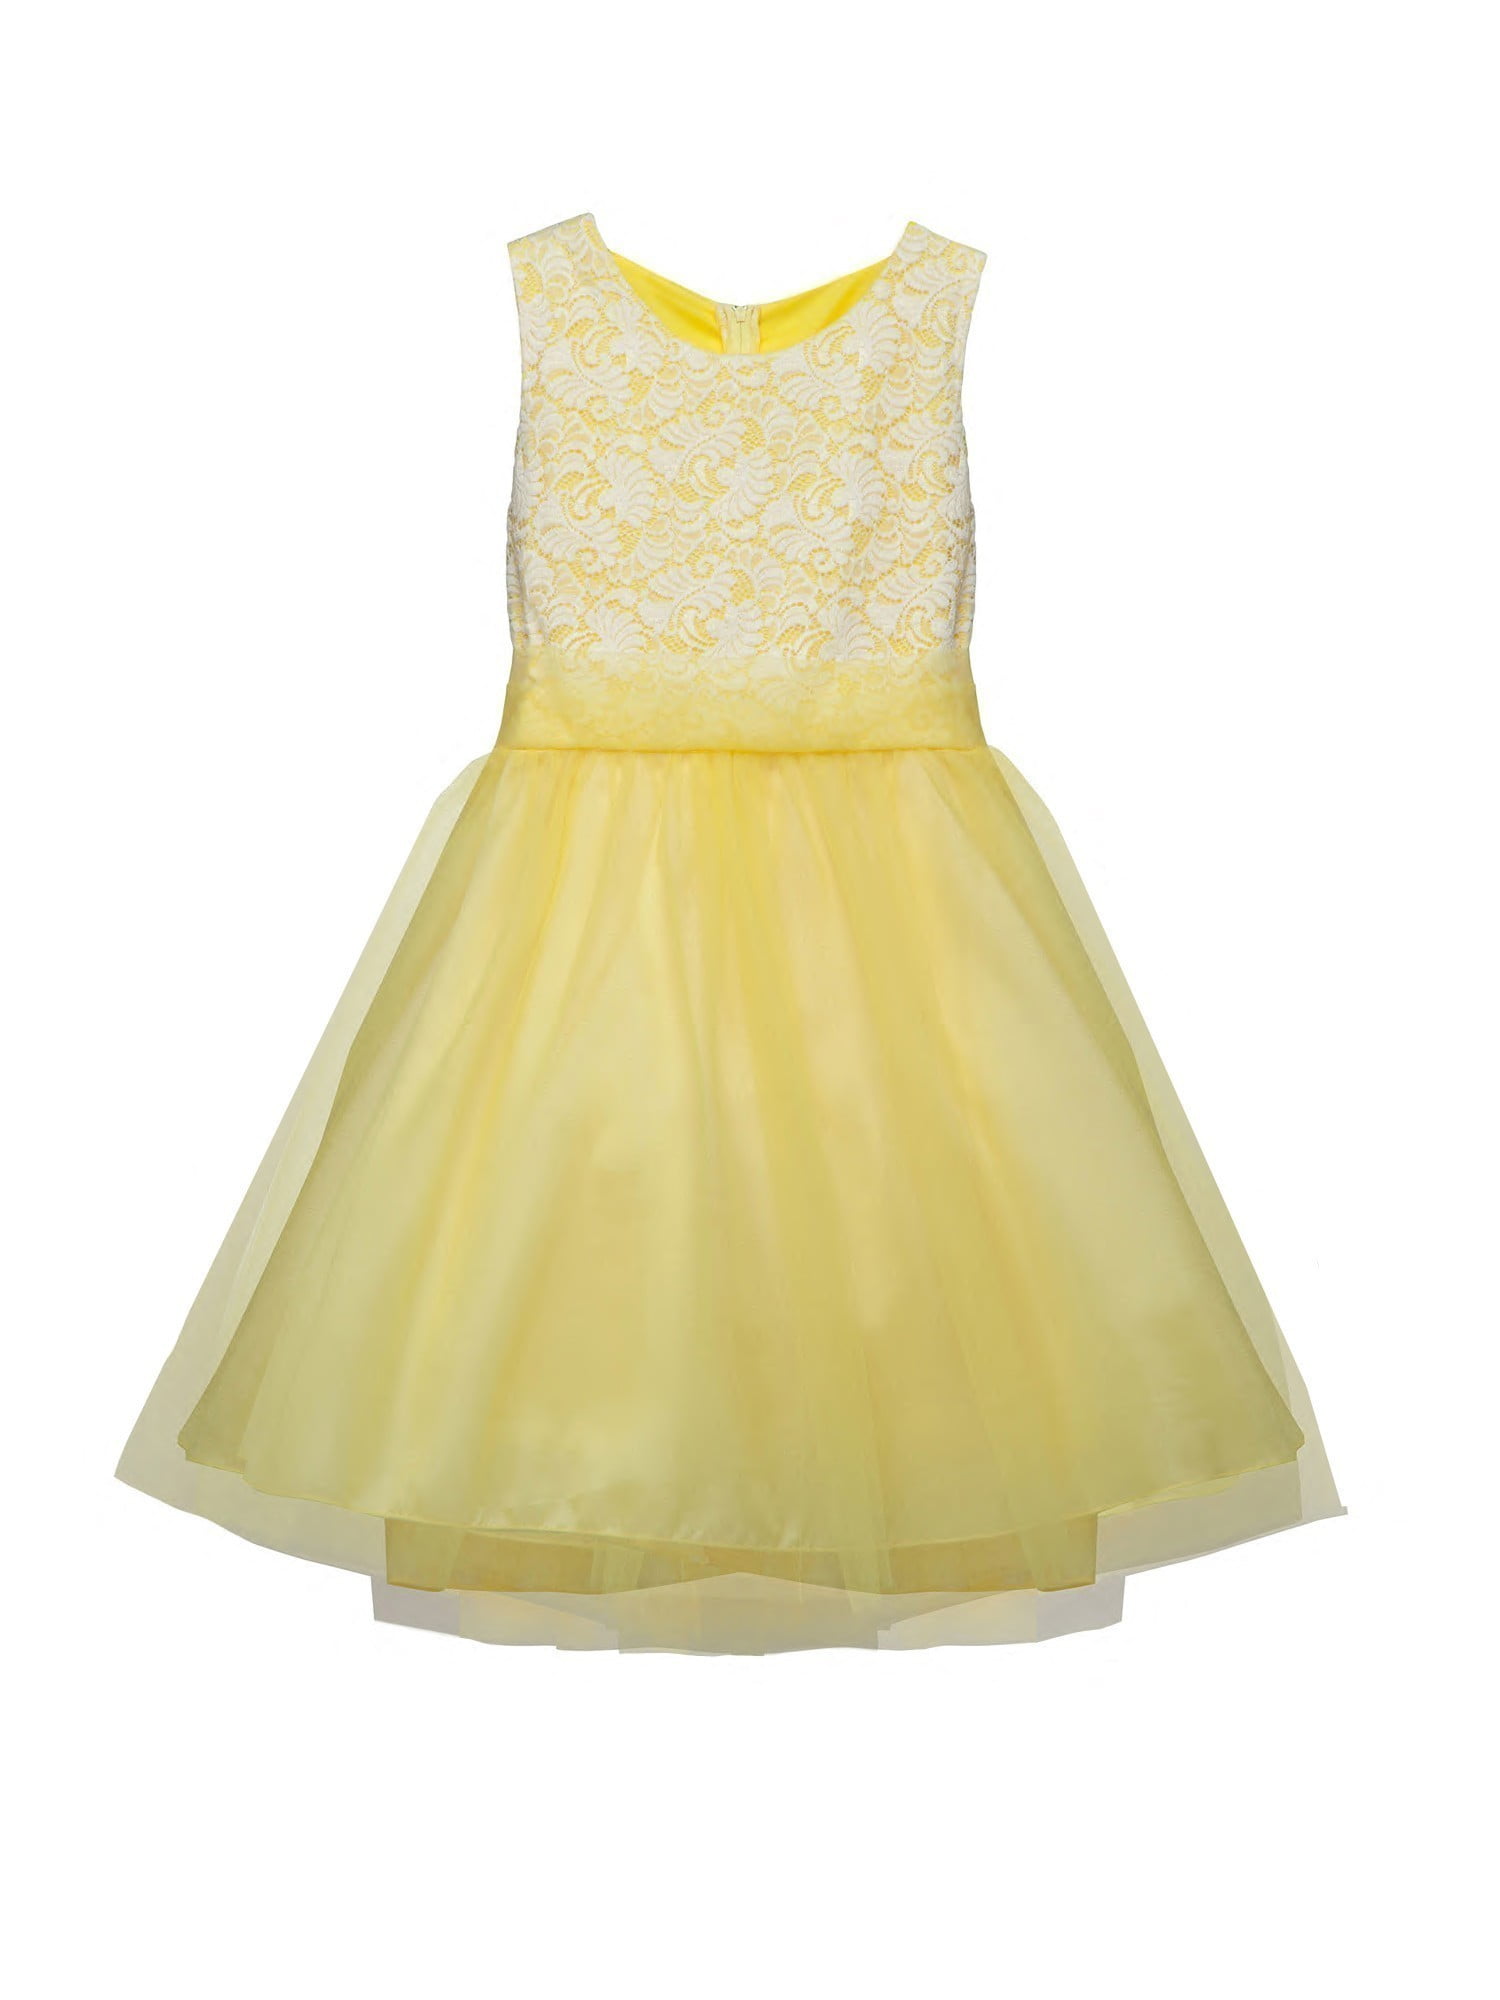 plus size yellow bridesmaid dresses